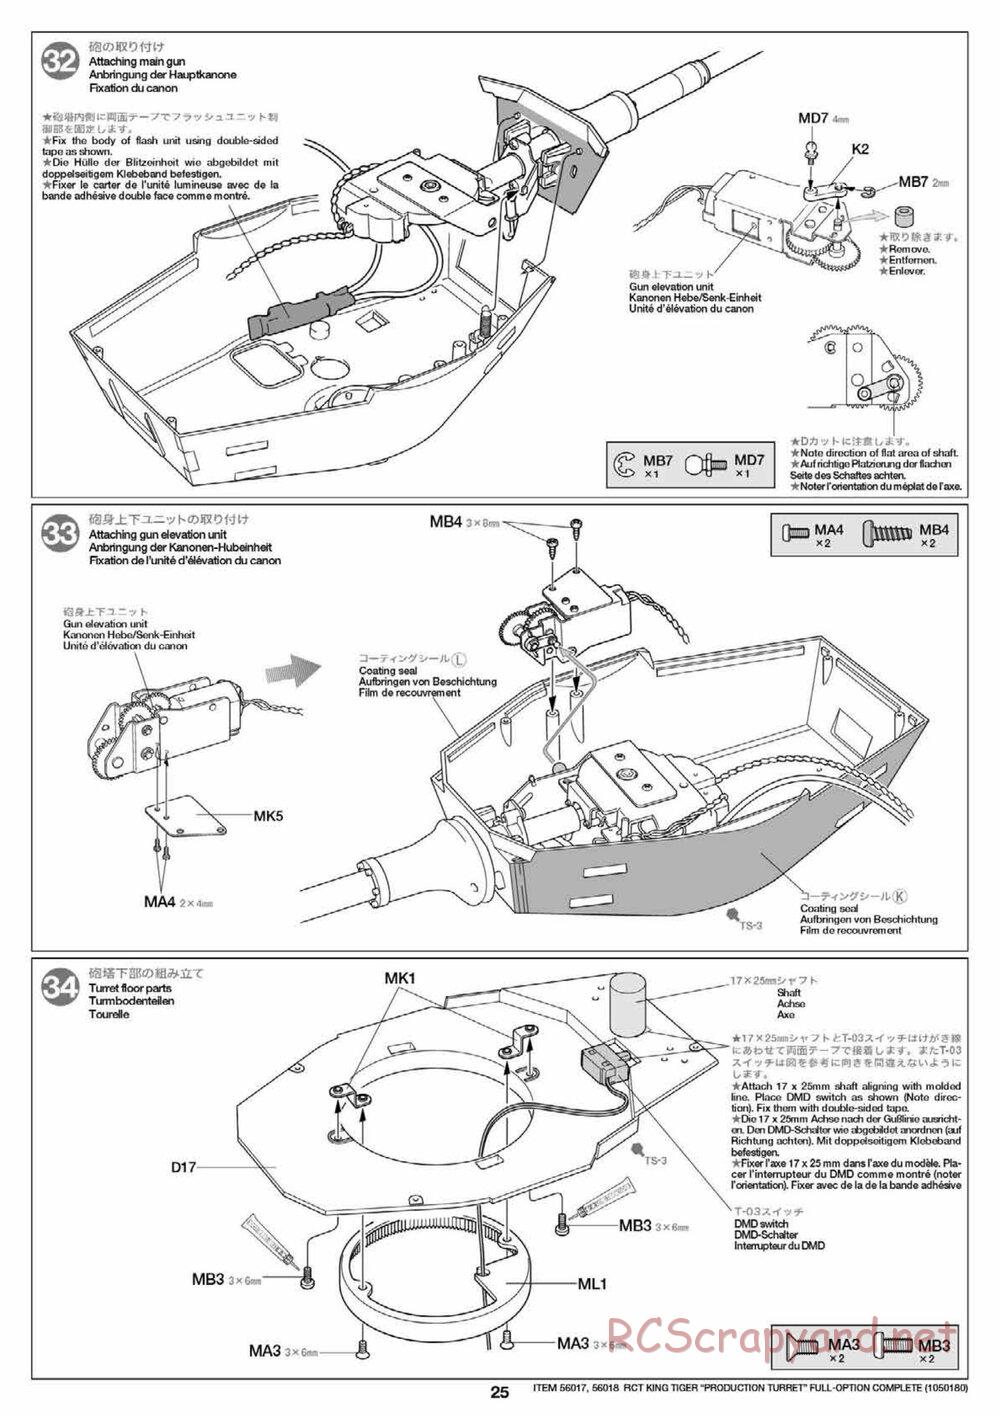 Tamiya - King Tiger - 1/16 Scale Chassis - Manual - Page 25